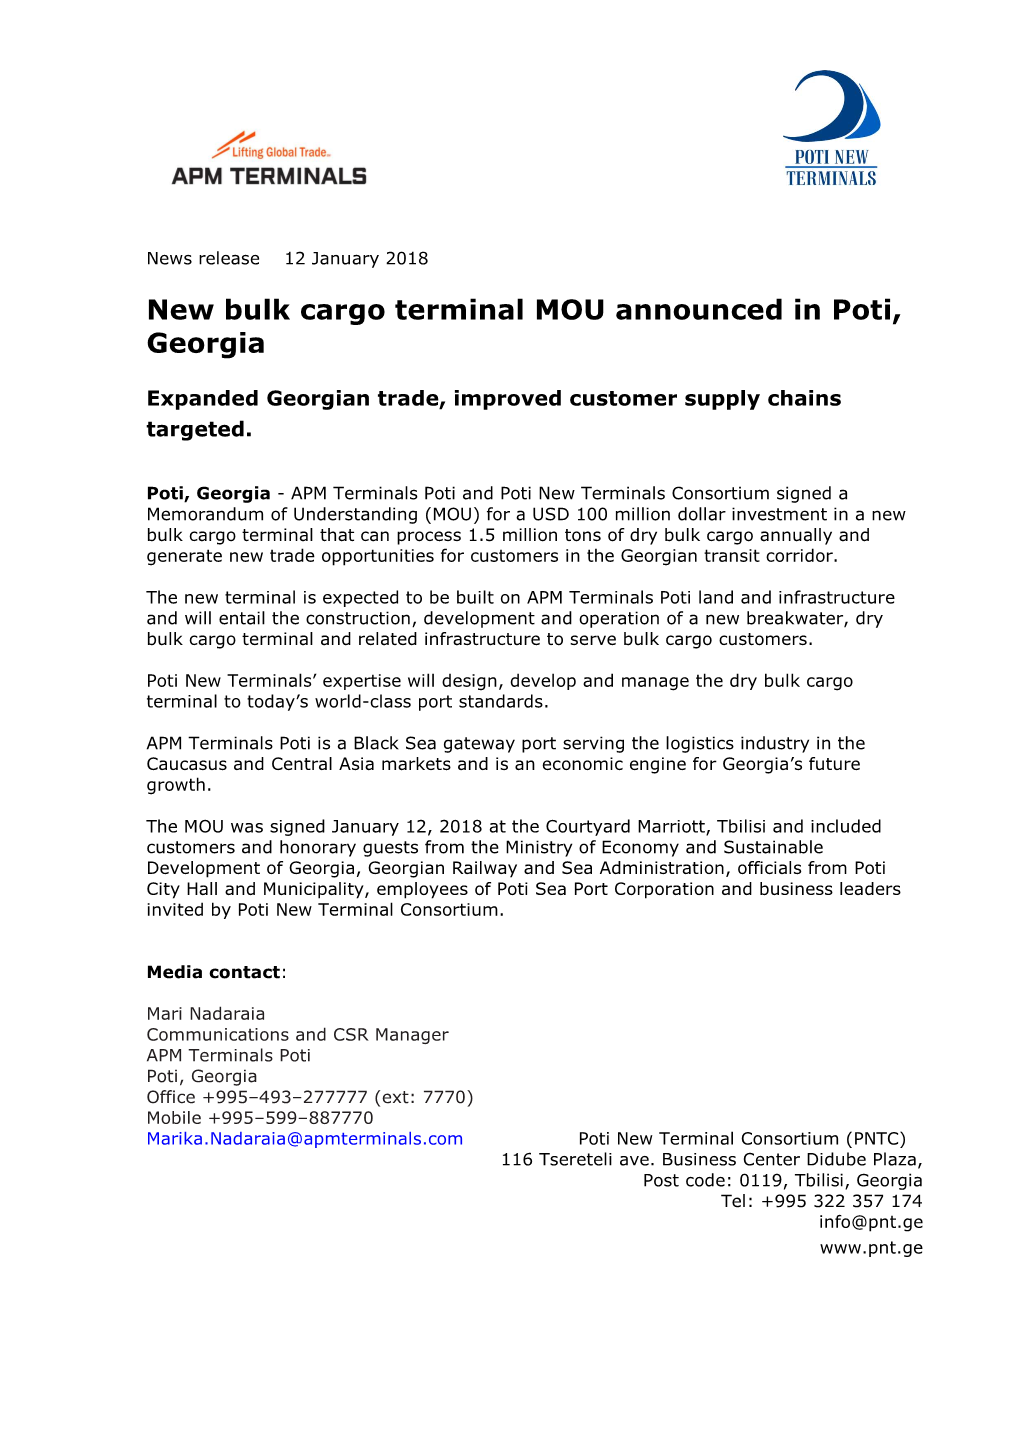 New Bulk Cargo Terminal MOU Announced in Poti, Georgia